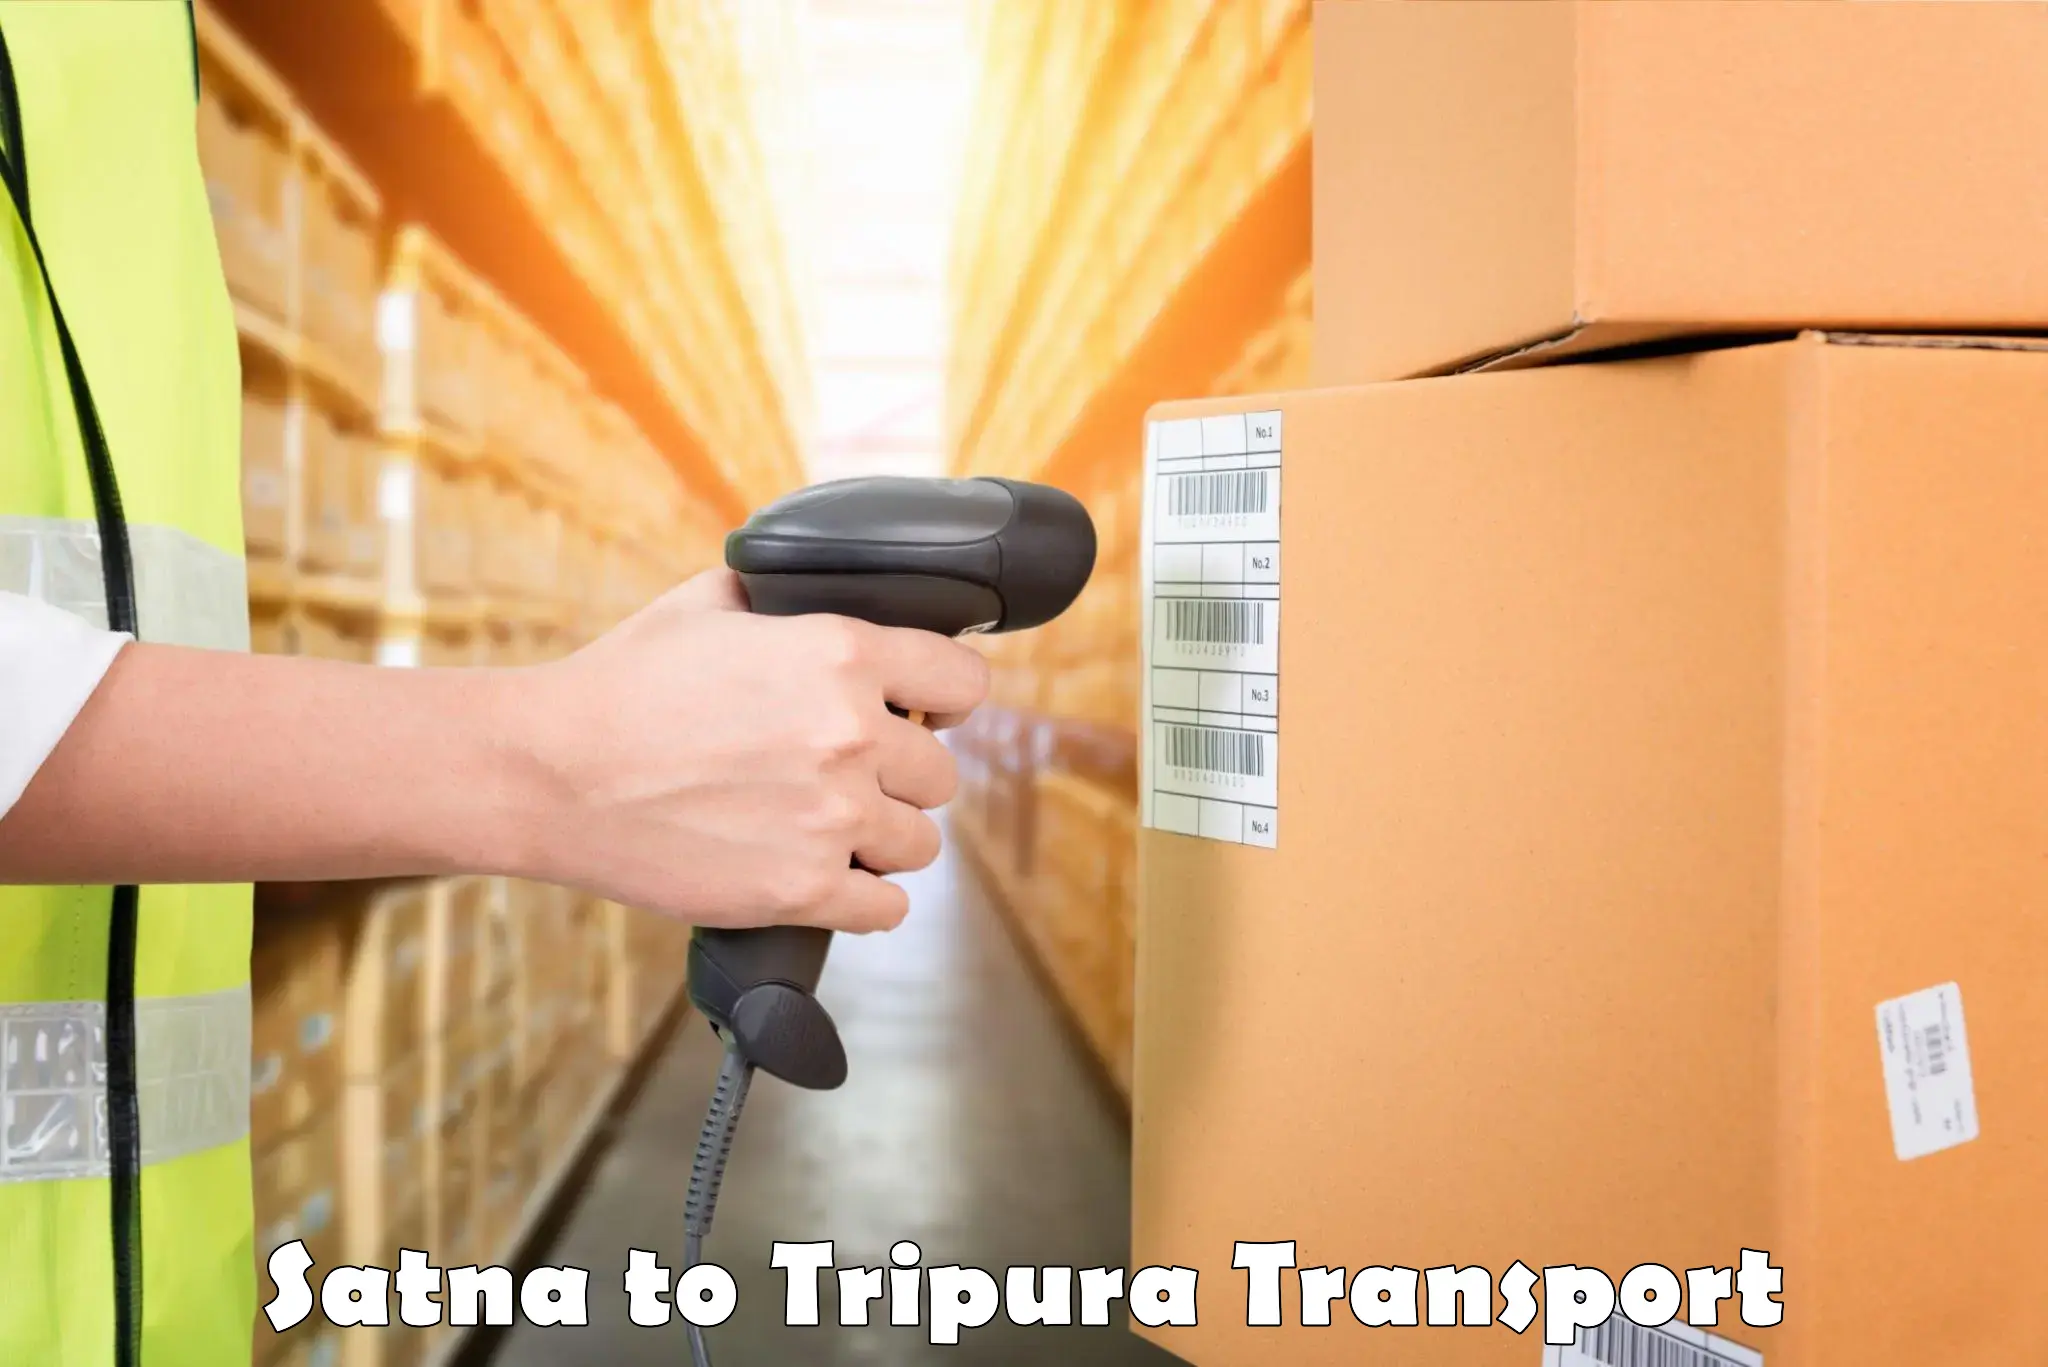 Transport in sharing Satna to Udaipur Tripura